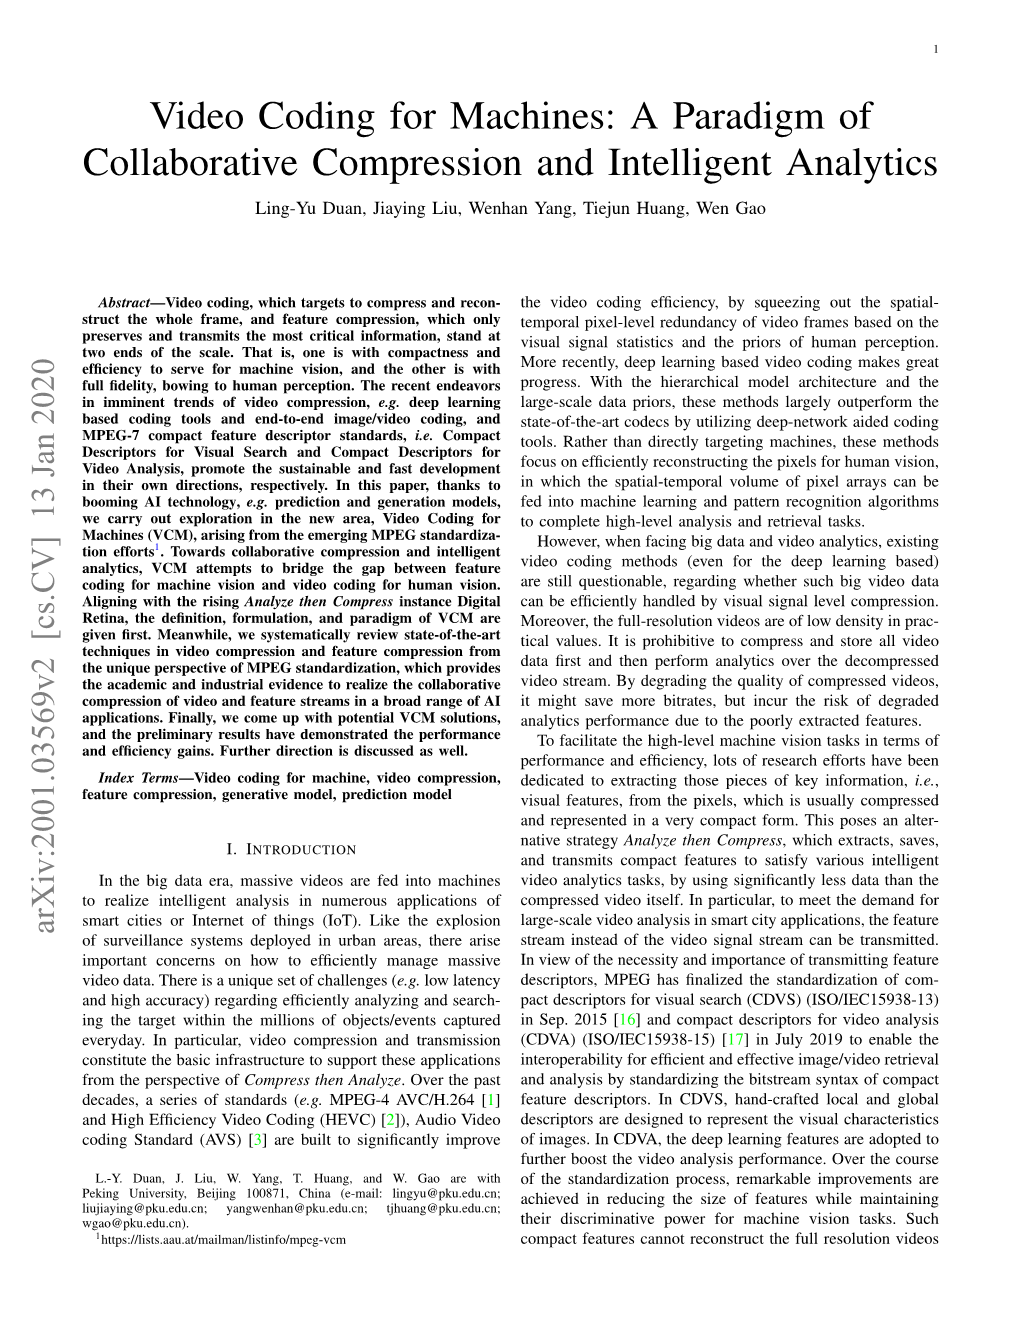 Video Coding for Machines: a Paradigm of Collaborative Compression and Intelligent Analytics Ling-Yu Duan, Jiaying Liu, Wenhan Yang, Tiejun Huang, Wen Gao